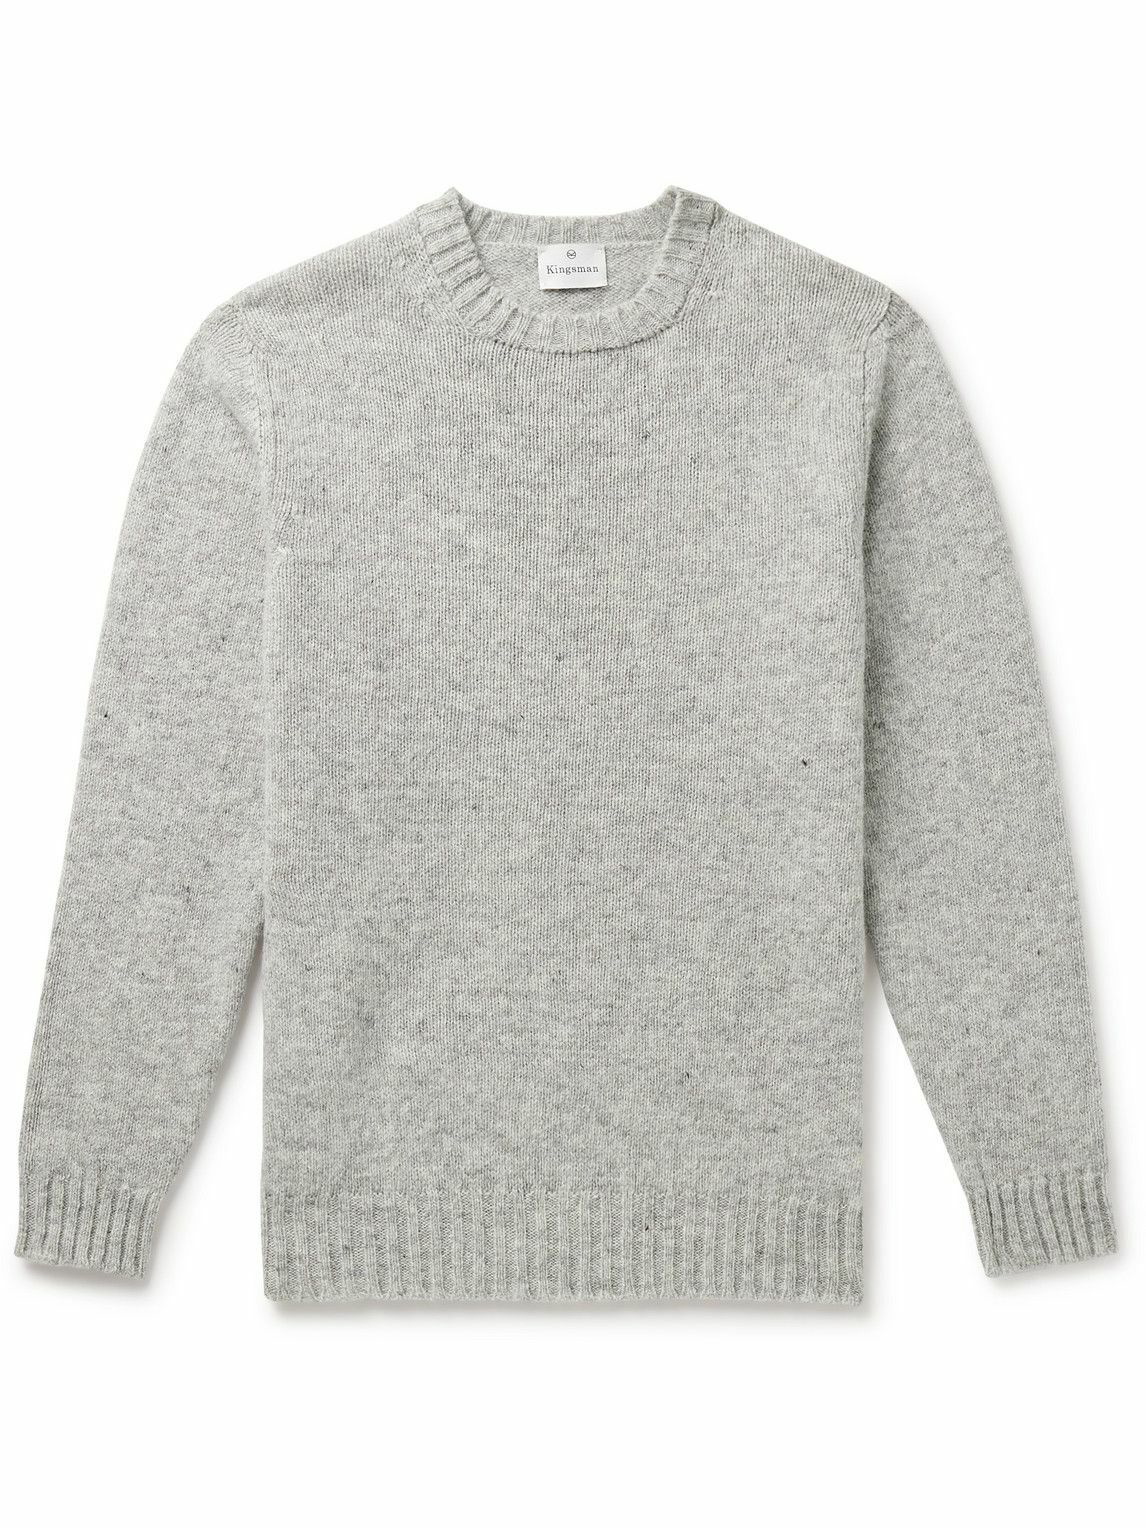 Kingsman - Shetland Wool Sweater - Gray Kingsman